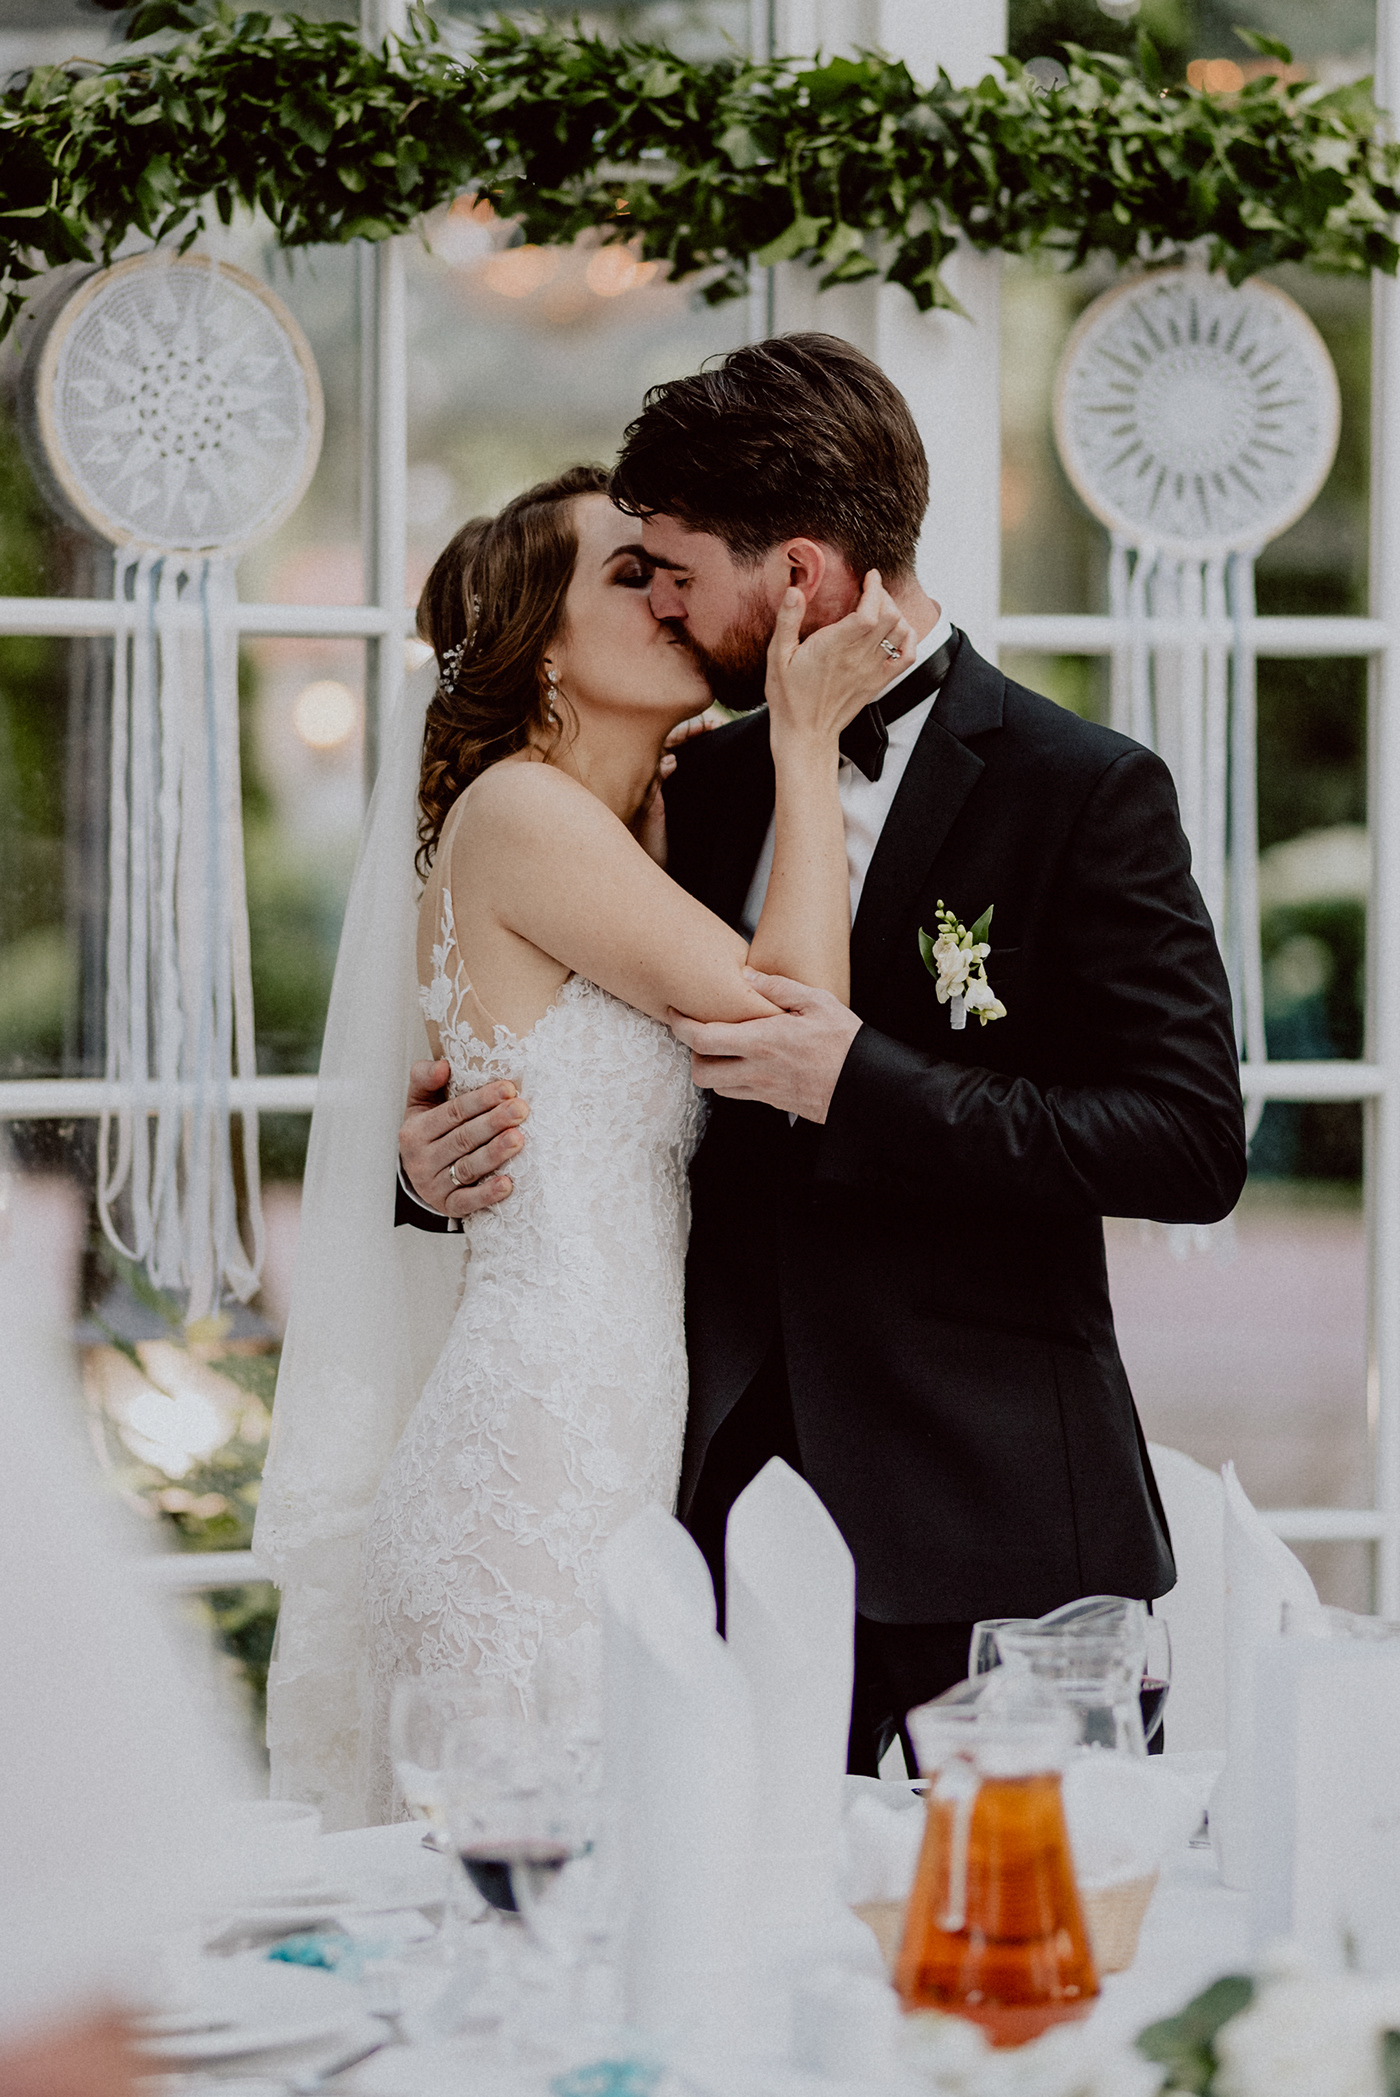 Image may contain: wedding dress, bride and kiss